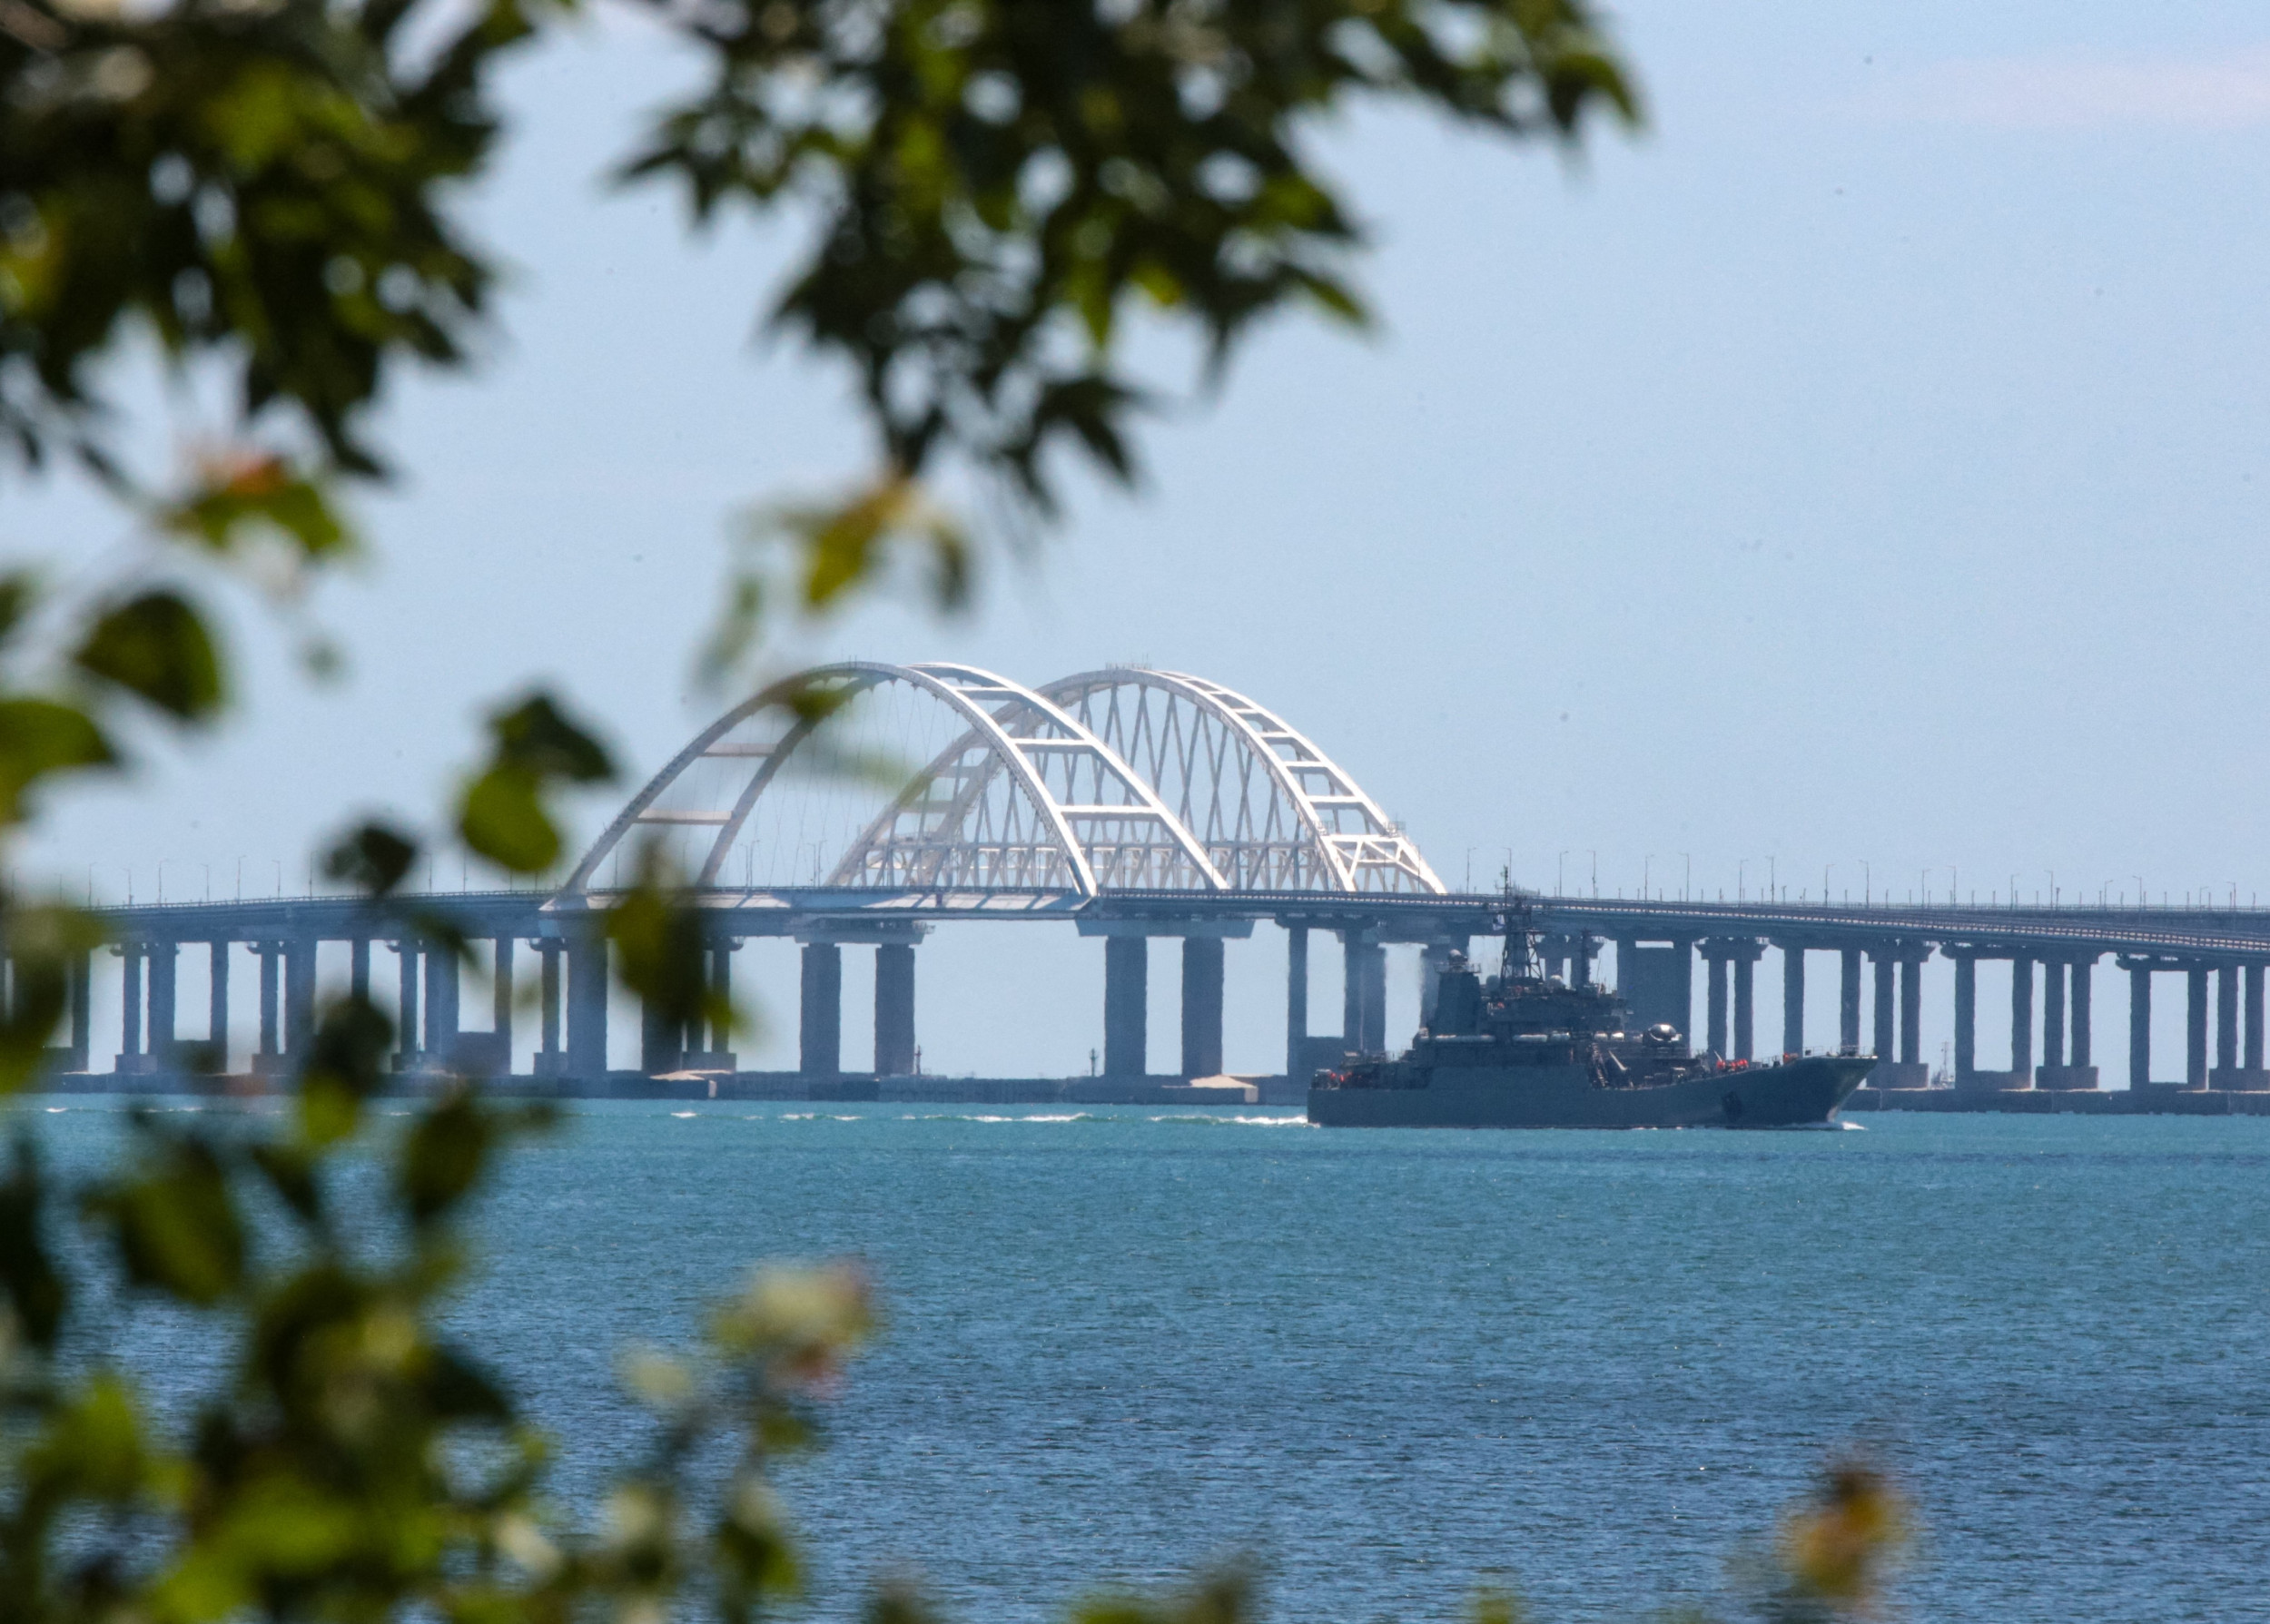 Crimea Mystery as Bridge Closed Again